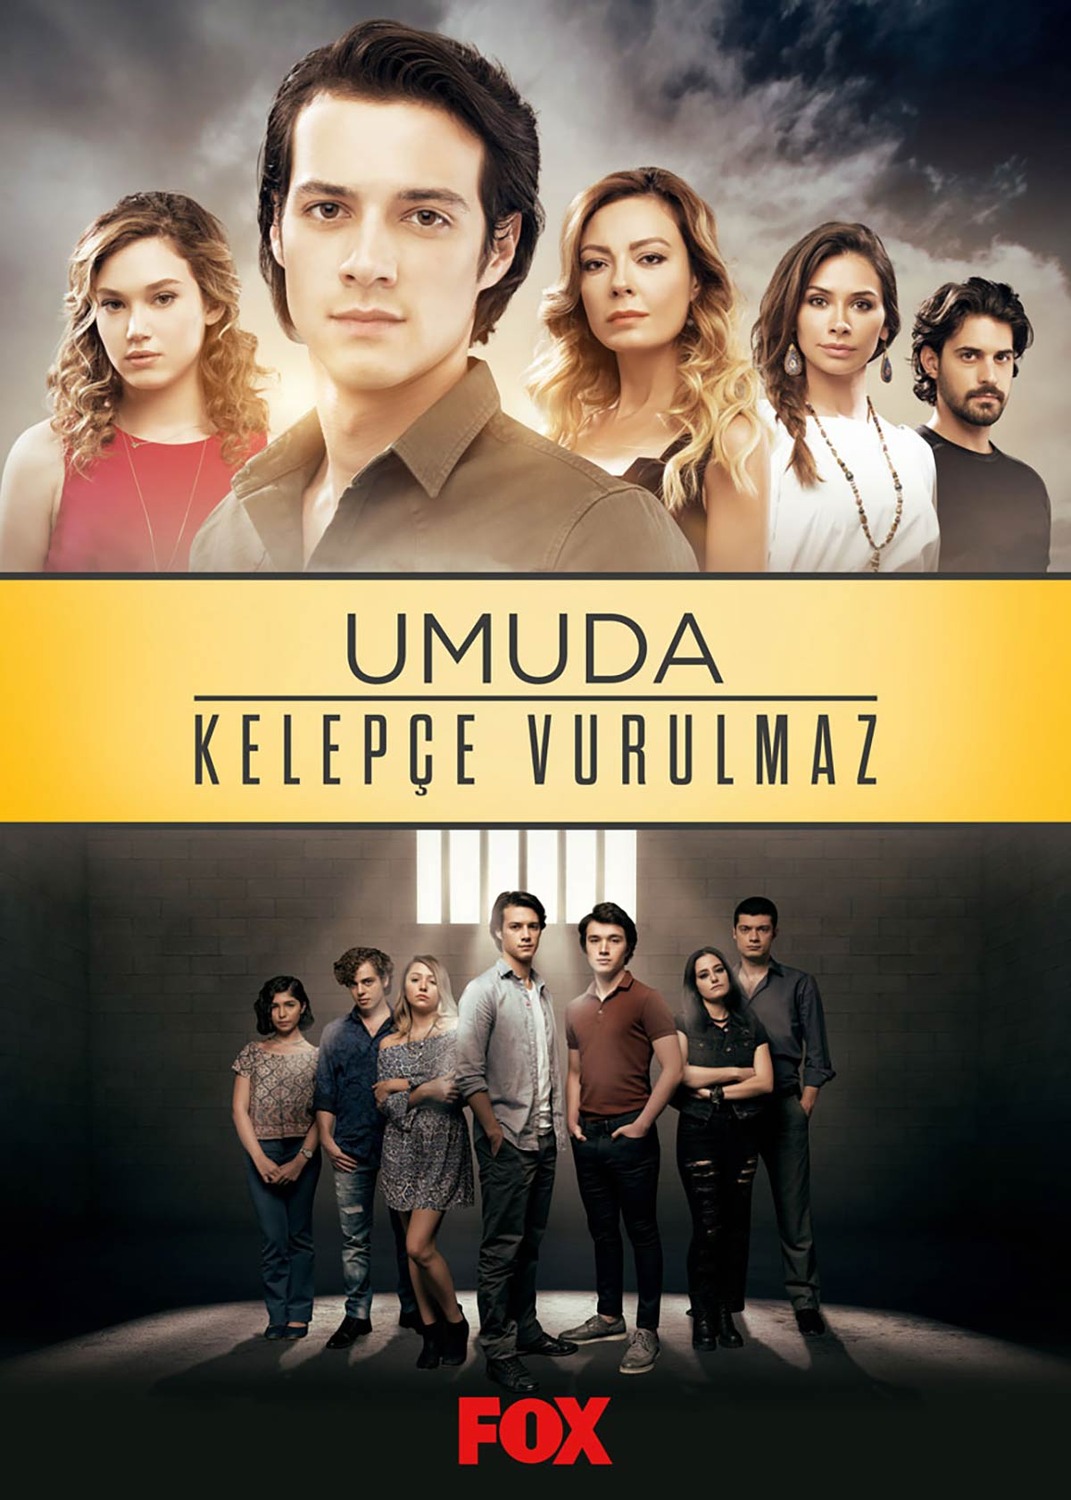 Extra Large TV Poster Image for Umuda Kelepce Vurulmaz 